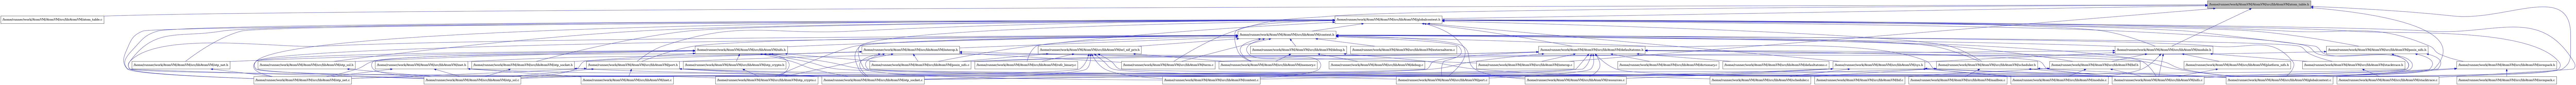 digraph {
    graph [bgcolor="#00000000"]
    node [shape=rectangle style=filled fillcolor="#FFFFFF" font=Helvetica padding=2]
    edge [color="#1414CE"]
    "11" [label="/home/runner/work/AtomVM/AtomVM/src/libAtomVM/bif.c" tooltip="/home/runner/work/AtomVM/AtomVM/src/libAtomVM/bif.c"]
    "47" [label="/home/runner/work/AtomVM/AtomVM/src/libAtomVM/dictionary.c" tooltip="/home/runner/work/AtomVM/AtomVM/src/libAtomVM/dictionary.c"]
    "10" [label="/home/runner/work/AtomVM/AtomVM/src/libAtomVM/bif.h" tooltip="/home/runner/work/AtomVM/AtomVM/src/libAtomVM/bif.h"]
    "32" [label="/home/runner/work/AtomVM/AtomVM/src/libAtomVM/platform_nifs.h" tooltip="/home/runner/work/AtomVM/AtomVM/src/libAtomVM/platform_nifs.h"]
    "20" [label="/home/runner/work/AtomVM/AtomVM/src/libAtomVM/posix_nifs.c" tooltip="/home/runner/work/AtomVM/AtomVM/src/libAtomVM/posix_nifs.c"]
    "48" [label="/home/runner/work/AtomVM/AtomVM/src/libAtomVM/posix_nifs.h" tooltip="/home/runner/work/AtomVM/AtomVM/src/libAtomVM/posix_nifs.h"]
    "46" [label="/home/runner/work/AtomVM/AtomVM/src/libAtomVM/defaultatoms.c" tooltip="/home/runner/work/AtomVM/AtomVM/src/libAtomVM/defaultatoms.c"]
    "45" [label="/home/runner/work/AtomVM/AtomVM/src/libAtomVM/defaultatoms.h" tooltip="/home/runner/work/AtomVM/AtomVM/src/libAtomVM/defaultatoms.h"]
    "26" [label="/home/runner/work/AtomVM/AtomVM/src/libAtomVM/inet.c" tooltip="/home/runner/work/AtomVM/AtomVM/src/libAtomVM/inet.c"]
    "25" [label="/home/runner/work/AtomVM/AtomVM/src/libAtomVM/inet.h" tooltip="/home/runner/work/AtomVM/AtomVM/src/libAtomVM/inet.h"]
    "16" [label="/home/runner/work/AtomVM/AtomVM/src/libAtomVM/scheduler.c" tooltip="/home/runner/work/AtomVM/AtomVM/src/libAtomVM/scheduler.c"]
    "43" [label="/home/runner/work/AtomVM/AtomVM/src/libAtomVM/scheduler.h" tooltip="/home/runner/work/AtomVM/AtomVM/src/libAtomVM/scheduler.h"]
    "8" [label="/home/runner/work/AtomVM/AtomVM/src/libAtomVM/context.c" tooltip="/home/runner/work/AtomVM/AtomVM/src/libAtomVM/context.c"]
    "9" [label="/home/runner/work/AtomVM/AtomVM/src/libAtomVM/context.h" tooltip="/home/runner/work/AtomVM/AtomVM/src/libAtomVM/context.h"]
    "41" [label="/home/runner/work/AtomVM/AtomVM/src/libAtomVM/port.c" tooltip="/home/runner/work/AtomVM/AtomVM/src/libAtomVM/port.c"]
    "42" [label="/home/runner/work/AtomVM/AtomVM/src/libAtomVM/port.h" tooltip="/home/runner/work/AtomVM/AtomVM/src/libAtomVM/port.h"]
    "2" [label="/home/runner/work/AtomVM/AtomVM/src/libAtomVM/atom_table.c" tooltip="/home/runner/work/AtomVM/AtomVM/src/libAtomVM/atom_table.c"]
    "1" [label="/home/runner/work/AtomVM/AtomVM/src/libAtomVM/atom_table.h" tooltip="/home/runner/work/AtomVM/AtomVM/src/libAtomVM/atom_table.h" fillcolor="#BFBFBF"]
    "34" [label="/home/runner/work/AtomVM/AtomVM/src/libAtomVM/stacktrace.c" tooltip="/home/runner/work/AtomVM/AtomVM/src/libAtomVM/stacktrace.c"]
    "33" [label="/home/runner/work/AtomVM/AtomVM/src/libAtomVM/stacktrace.h" tooltip="/home/runner/work/AtomVM/AtomVM/src/libAtomVM/stacktrace.h"]
    "21" [label="/home/runner/work/AtomVM/AtomVM/src/libAtomVM/refc_binary.c" tooltip="/home/runner/work/AtomVM/AtomVM/src/libAtomVM/refc_binary.c"]
    "44" [label="/home/runner/work/AtomVM/AtomVM/src/libAtomVM/mailbox.c" tooltip="/home/runner/work/AtomVM/AtomVM/src/libAtomVM/mailbox.c"]
    "12" [label="/home/runner/work/AtomVM/AtomVM/src/libAtomVM/module.c" tooltip="/home/runner/work/AtomVM/AtomVM/src/libAtomVM/module.c"]
    "31" [label="/home/runner/work/AtomVM/AtomVM/src/libAtomVM/module.h" tooltip="/home/runner/work/AtomVM/AtomVM/src/libAtomVM/module.h"]
    "6" [label="/home/runner/work/AtomVM/AtomVM/src/libAtomVM/avmpack.c" tooltip="/home/runner/work/AtomVM/AtomVM/src/libAtomVM/avmpack.c"]
    "5" [label="/home/runner/work/AtomVM/AtomVM/src/libAtomVM/avmpack.h" tooltip="/home/runner/work/AtomVM/AtomVM/src/libAtomVM/avmpack.h"]
    "30" [label="/home/runner/work/AtomVM/AtomVM/src/libAtomVM/term.c" tooltip="/home/runner/work/AtomVM/AtomVM/src/libAtomVM/term.c"]
    "28" [label="/home/runner/work/AtomVM/AtomVM/src/libAtomVM/interop.c" tooltip="/home/runner/work/AtomVM/AtomVM/src/libAtomVM/interop.c"]
    "19" [label="/home/runner/work/AtomVM/AtomVM/src/libAtomVM/otp_ssl.c" tooltip="/home/runner/work/AtomVM/AtomVM/src/libAtomVM/otp_ssl.c"]
    "24" [label="/home/runner/work/AtomVM/AtomVM/src/libAtomVM/interop.h" tooltip="/home/runner/work/AtomVM/AtomVM/src/libAtomVM/interop.h"]
    "40" [label="/home/runner/work/AtomVM/AtomVM/src/libAtomVM/otp_ssl.h" tooltip="/home/runner/work/AtomVM/AtomVM/src/libAtomVM/otp_ssl.h"]
    "22" [label="/home/runner/work/AtomVM/AtomVM/src/libAtomVM/resources.c" tooltip="/home/runner/work/AtomVM/AtomVM/src/libAtomVM/resources.c"]
    "29" [label="/home/runner/work/AtomVM/AtomVM/src/libAtomVM/otp_crypto.c" tooltip="/home/runner/work/AtomVM/AtomVM/src/libAtomVM/otp_crypto.c"]
    "37" [label="/home/runner/work/AtomVM/AtomVM/src/libAtomVM/otp_crypto.h" tooltip="/home/runner/work/AtomVM/AtomVM/src/libAtomVM/otp_crypto.h"]
    "27" [label="/home/runner/work/AtomVM/AtomVM/src/libAtomVM/otp_net.c" tooltip="/home/runner/work/AtomVM/AtomVM/src/libAtomVM/otp_net.c"]
    "38" [label="/home/runner/work/AtomVM/AtomVM/src/libAtomVM/otp_net.h" tooltip="/home/runner/work/AtomVM/AtomVM/src/libAtomVM/otp_net.h"]
    "17" [label="/home/runner/work/AtomVM/AtomVM/src/libAtomVM/erl_nif_priv.h" tooltip="/home/runner/work/AtomVM/AtomVM/src/libAtomVM/erl_nif_priv.h"]
    "35" [label="/home/runner/work/AtomVM/AtomVM/src/libAtomVM/sys.h" tooltip="/home/runner/work/AtomVM/AtomVM/src/libAtomVM/sys.h"]
    "7" [label="/home/runner/work/AtomVM/AtomVM/src/libAtomVM/nifs.c" tooltip="/home/runner/work/AtomVM/AtomVM/src/libAtomVM/nifs.c"]
    "36" [label="/home/runner/work/AtomVM/AtomVM/src/libAtomVM/nifs.h" tooltip="/home/runner/work/AtomVM/AtomVM/src/libAtomVM/nifs.h"]
    "14" [label="/home/runner/work/AtomVM/AtomVM/src/libAtomVM/debug.c" tooltip="/home/runner/work/AtomVM/AtomVM/src/libAtomVM/debug.c"]
    "13" [label="/home/runner/work/AtomVM/AtomVM/src/libAtomVM/debug.h" tooltip="/home/runner/work/AtomVM/AtomVM/src/libAtomVM/debug.h"]
    "3" [label="/home/runner/work/AtomVM/AtomVM/src/libAtomVM/globalcontext.c" tooltip="/home/runner/work/AtomVM/AtomVM/src/libAtomVM/globalcontext.c"]
    "4" [label="/home/runner/work/AtomVM/AtomVM/src/libAtomVM/globalcontext.h" tooltip="/home/runner/work/AtomVM/AtomVM/src/libAtomVM/globalcontext.h"]
    "15" [label="/home/runner/work/AtomVM/AtomVM/src/libAtomVM/memory.c" tooltip="/home/runner/work/AtomVM/AtomVM/src/libAtomVM/memory.c"]
    "18" [label="/home/runner/work/AtomVM/AtomVM/src/libAtomVM/otp_socket.c" tooltip="/home/runner/work/AtomVM/AtomVM/src/libAtomVM/otp_socket.c"]
    "39" [label="/home/runner/work/AtomVM/AtomVM/src/libAtomVM/otp_socket.h" tooltip="/home/runner/work/AtomVM/AtomVM/src/libAtomVM/otp_socket.h"]
    "23" [label="/home/runner/work/AtomVM/AtomVM/src/libAtomVM/externalterm.c" tooltip="/home/runner/work/AtomVM/AtomVM/src/libAtomVM/externalterm.c"]
    "10" -> "11" [dir=back tooltip="include"]
    "10" -> "12" [dir=back tooltip="include"]
    "10" -> "7" [dir=back tooltip="include"]
    "32" -> "7" [dir=back tooltip="include"]
    "48" -> "3" [dir=back tooltip="include"]
    "48" -> "7" [dir=back tooltip="include"]
    "48" -> "18" [dir=back tooltip="include"]
    "48" -> "20" [dir=back tooltip="include"]
    "45" -> "11" [dir=back tooltip="include"]
    "45" -> "46" [dir=back tooltip="include"]
    "45" -> "47" [dir=back tooltip="include"]
    "45" -> "3" [dir=back tooltip="include"]
    "45" -> "28" [dir=back tooltip="include"]
    "45" -> "7" [dir=back tooltip="include"]
    "45" -> "29" [dir=back tooltip="include"]
    "45" -> "27" [dir=back tooltip="include"]
    "45" -> "18" [dir=back tooltip="include"]
    "45" -> "19" [dir=back tooltip="include"]
    "45" -> "41" [dir=back tooltip="include"]
    "45" -> "42" [dir=back tooltip="include"]
    "45" -> "20" [dir=back tooltip="include"]
    "45" -> "22" [dir=back tooltip="include"]
    "45" -> "34" [dir=back tooltip="include"]
    "25" -> "26" [dir=back tooltip="include"]
    "25" -> "27" [dir=back tooltip="include"]
    "25" -> "18" [dir=back tooltip="include"]
    "25" -> "19" [dir=back tooltip="include"]
    "43" -> "3" [dir=back tooltip="include"]
    "43" -> "44" [dir=back tooltip="include"]
    "43" -> "7" [dir=back tooltip="include"]
    "43" -> "18" [dir=back tooltip="include"]
    "43" -> "16" [dir=back tooltip="include"]
    "9" -> "10" [dir=back tooltip="include"]
    "9" -> "8" [dir=back tooltip="include"]
    "9" -> "13" [dir=back tooltip="include"]
    "9" -> "17" [dir=back tooltip="include"]
    "9" -> "23" [dir=back tooltip="include"]
    "9" -> "3" [dir=back tooltip="include"]
    "9" -> "24" [dir=back tooltip="include"]
    "9" -> "15" [dir=back tooltip="include"]
    "9" -> "12" [dir=back tooltip="include"]
    "9" -> "31" [dir=back tooltip="include"]
    "9" -> "7" [dir=back tooltip="include"]
    "9" -> "36" [dir=back tooltip="include"]
    "9" -> "29" [dir=back tooltip="include"]
    "9" -> "27" [dir=back tooltip="include"]
    "9" -> "18" [dir=back tooltip="include"]
    "9" -> "19" [dir=back tooltip="include"]
    "9" -> "41" [dir=back tooltip="include"]
    "9" -> "42" [dir=back tooltip="include"]
    "9" -> "21" [dir=back tooltip="include"]
    "9" -> "22" [dir=back tooltip="include"]
    "9" -> "43" [dir=back tooltip="include"]
    "9" -> "33" [dir=back tooltip="include"]
    "9" -> "30" [dir=back tooltip="include"]
    "42" -> "26" [dir=back tooltip="include"]
    "42" -> "7" [dir=back tooltip="include"]
    "42" -> "27" [dir=back tooltip="include"]
    "42" -> "18" [dir=back tooltip="include"]
    "42" -> "19" [dir=back tooltip="include"]
    "42" -> "41" [dir=back tooltip="include"]
    "1" -> "2" [dir=back tooltip="include"]
    "1" -> "3" [dir=back tooltip="include"]
    "1" -> "4" [dir=back tooltip="include"]
    "1" -> "28" [dir=back tooltip="include"]
    "1" -> "31" [dir=back tooltip="include"]
    "1" -> "7" [dir=back tooltip="include"]
    "1" -> "30" [dir=back tooltip="include"]
    "33" -> "34" [dir=back tooltip="include"]
    "31" -> "10" [dir=back tooltip="include"]
    "31" -> "12" [dir=back tooltip="include"]
    "31" -> "7" [dir=back tooltip="include"]
    "31" -> "32" [dir=back tooltip="include"]
    "31" -> "33" [dir=back tooltip="include"]
    "31" -> "35" [dir=back tooltip="include"]
    "31" -> "30" [dir=back tooltip="include"]
    "5" -> "6" [dir=back tooltip="include"]
    "5" -> "3" [dir=back tooltip="include"]
    "5" -> "7" [dir=back tooltip="include"]
    "24" -> "25" [dir=back tooltip="include"]
    "24" -> "28" [dir=back tooltip="include"]
    "24" -> "7" [dir=back tooltip="include"]
    "24" -> "29" [dir=back tooltip="include"]
    "24" -> "27" [dir=back tooltip="include"]
    "24" -> "18" [dir=back tooltip="include"]
    "24" -> "19" [dir=back tooltip="include"]
    "24" -> "20" [dir=back tooltip="include"]
    "24" -> "30" [dir=back tooltip="include"]
    "40" -> "19" [dir=back tooltip="include"]
    "37" -> "29" [dir=back tooltip="include"]
    "38" -> "27" [dir=back tooltip="include"]
    "17" -> "8" [dir=back tooltip="include"]
    "17" -> "3" [dir=back tooltip="include"]
    "17" -> "15" [dir=back tooltip="include"]
    "17" -> "18" [dir=back tooltip="include"]
    "17" -> "19" [dir=back tooltip="include"]
    "17" -> "20" [dir=back tooltip="include"]
    "17" -> "21" [dir=back tooltip="include"]
    "17" -> "22" [dir=back tooltip="include"]
    "35" -> "8" [dir=back tooltip="include"]
    "35" -> "3" [dir=back tooltip="include"]
    "35" -> "12" [dir=back tooltip="include"]
    "35" -> "7" [dir=back tooltip="include"]
    "35" -> "18" [dir=back tooltip="include"]
    "35" -> "22" [dir=back tooltip="include"]
    "35" -> "16" [dir=back tooltip="include"]
    "36" -> "12" [dir=back tooltip="include"]
    "36" -> "7" [dir=back tooltip="include"]
    "36" -> "29" [dir=back tooltip="include"]
    "36" -> "37" [dir=back tooltip="include"]
    "36" -> "27" [dir=back tooltip="include"]
    "36" -> "38" [dir=back tooltip="include"]
    "36" -> "18" [dir=back tooltip="include"]
    "36" -> "39" [dir=back tooltip="include"]
    "36" -> "19" [dir=back tooltip="include"]
    "36" -> "40" [dir=back tooltip="include"]
    "36" -> "20" [dir=back tooltip="include"]
    "13" -> "14" [dir=back tooltip="include"]
    "13" -> "15" [dir=back tooltip="include"]
    "13" -> "16" [dir=back tooltip="include"]
    "4" -> "5" [dir=back tooltip="include"]
    "4" -> "8" [dir=back tooltip="include"]
    "4" -> "9" [dir=back tooltip="include"]
    "4" -> "45" [dir=back tooltip="include"]
    "4" -> "3" [dir=back tooltip="include"]
    "4" -> "15" [dir=back tooltip="include"]
    "4" -> "12" [dir=back tooltip="include"]
    "4" -> "31" [dir=back tooltip="include"]
    "4" -> "7" [dir=back tooltip="include"]
    "4" -> "29" [dir=back tooltip="include"]
    "4" -> "27" [dir=back tooltip="include"]
    "4" -> "38" [dir=back tooltip="include"]
    "4" -> "18" [dir=back tooltip="include"]
    "4" -> "39" [dir=back tooltip="include"]
    "4" -> "19" [dir=back tooltip="include"]
    "4" -> "40" [dir=back tooltip="include"]
    "4" -> "41" [dir=back tooltip="include"]
    "4" -> "42" [dir=back tooltip="include"]
    "4" -> "20" [dir=back tooltip="include"]
    "4" -> "48" [dir=back tooltip="include"]
    "4" -> "43" [dir=back tooltip="include"]
    "4" -> "34" [dir=back tooltip="include"]
    "4" -> "35" [dir=back tooltip="include"]
    "39" -> "18" [dir=back tooltip="include"]
    "39" -> "19" [dir=back tooltip="include"]
}